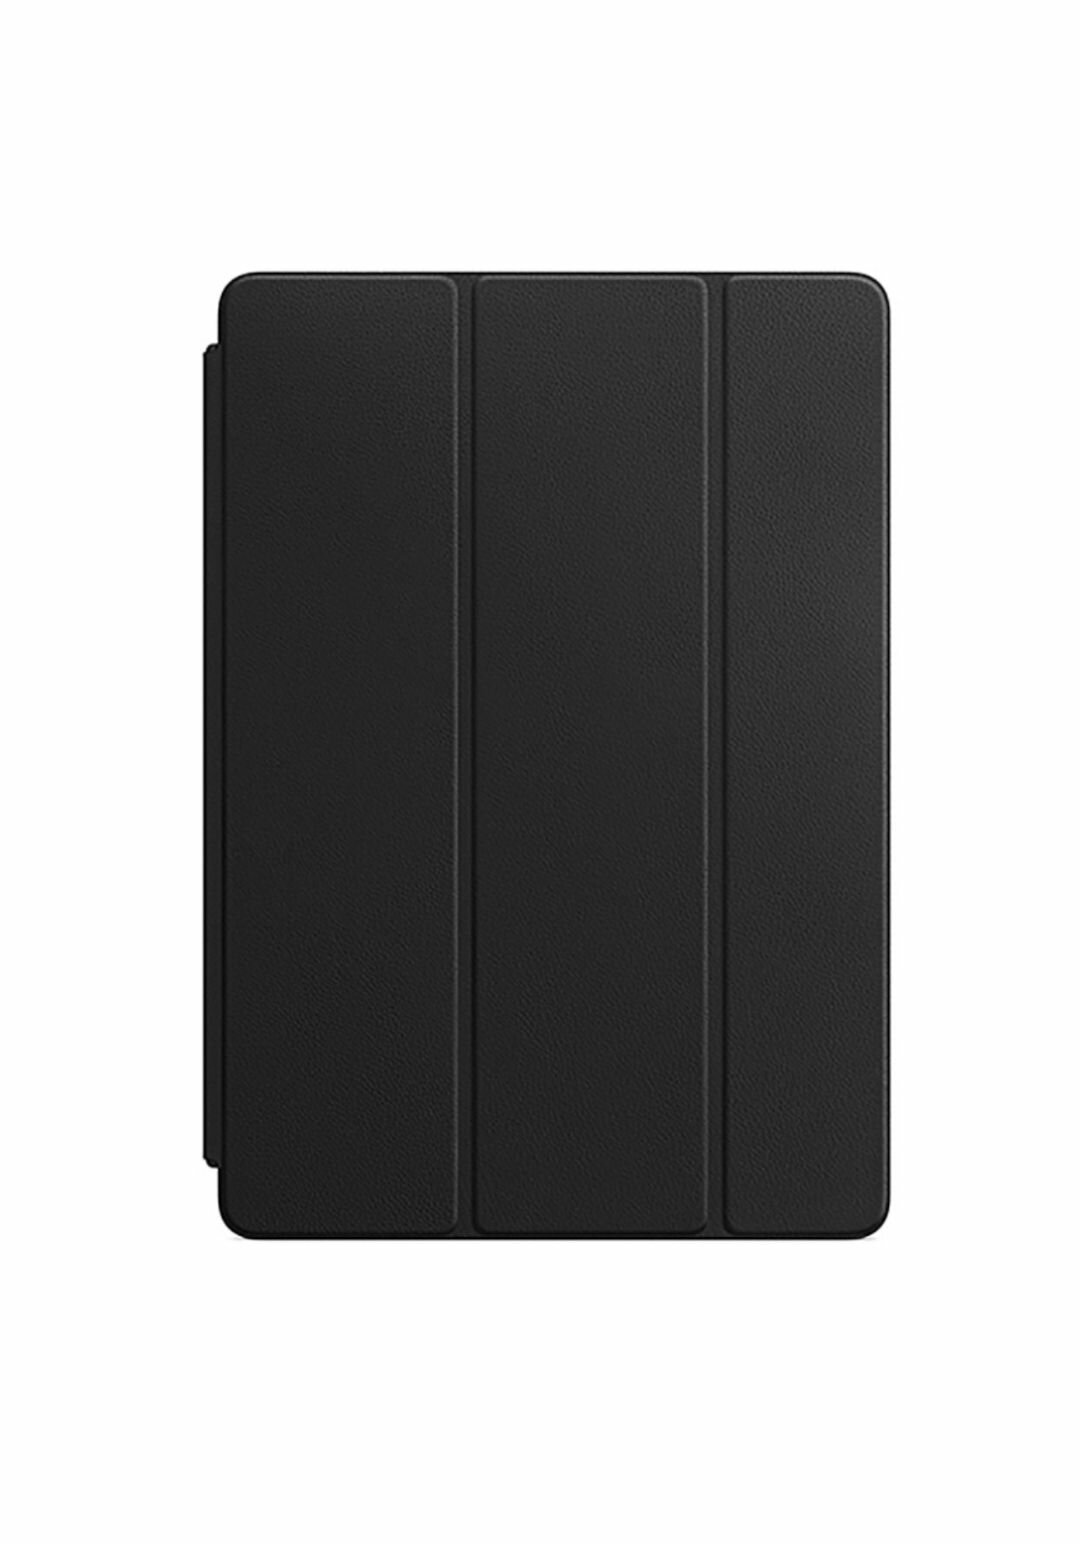 IPad Pro 2, 2017 10.5 A1701, A1709 чехол книжка smart case для планшета эпл айпад про аир чёрный смарт кейс